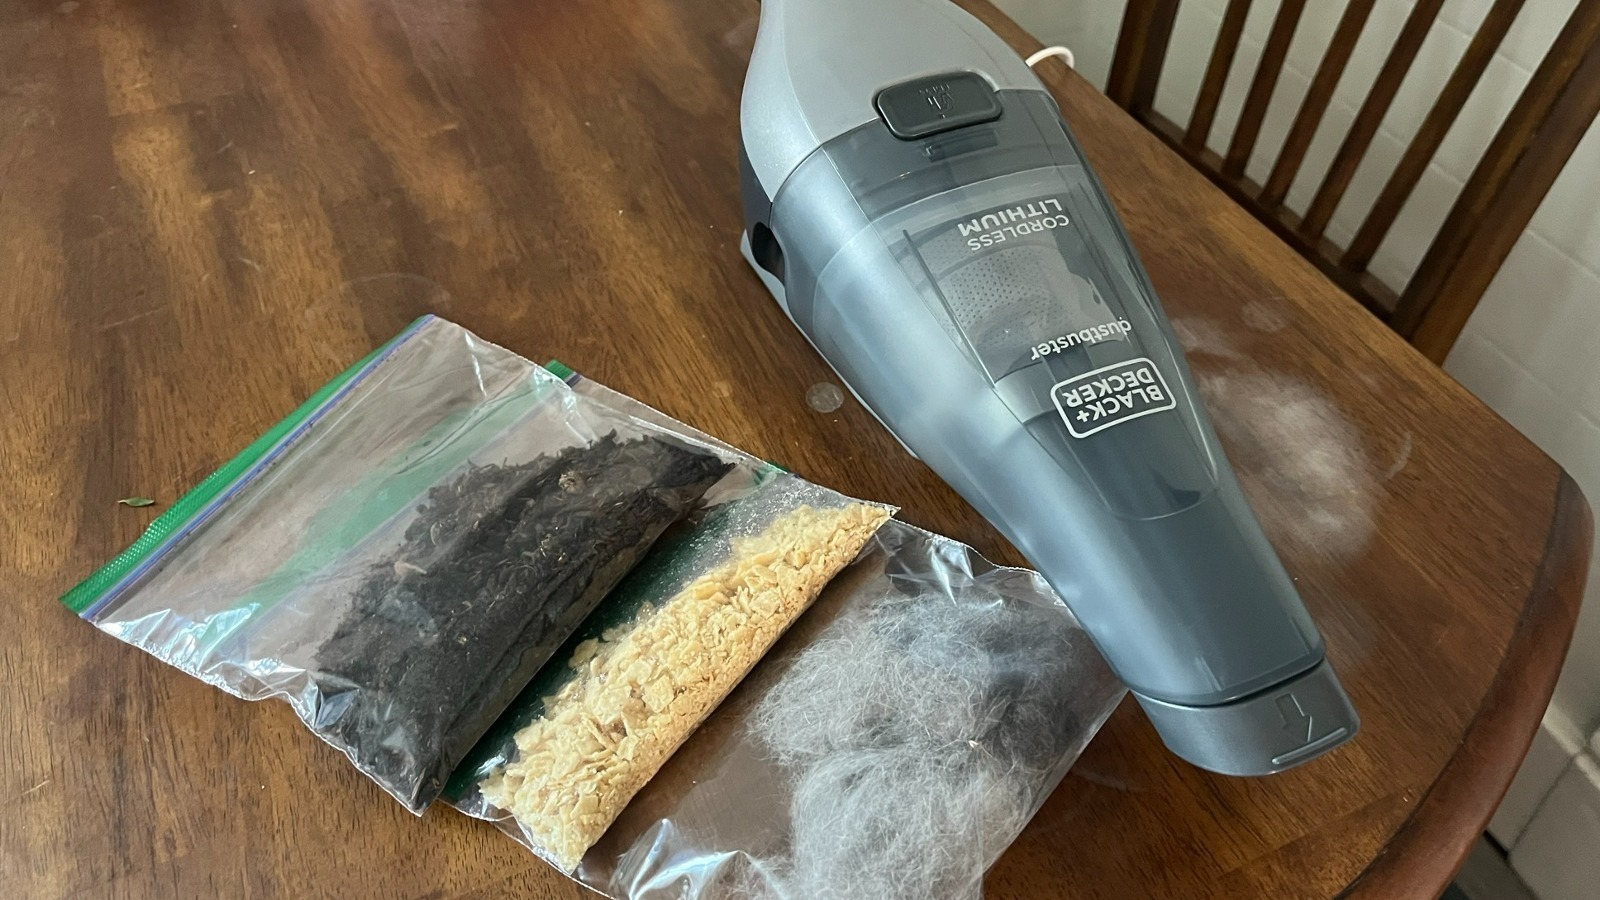 Dustbuster Cordless Handheld Vacuum